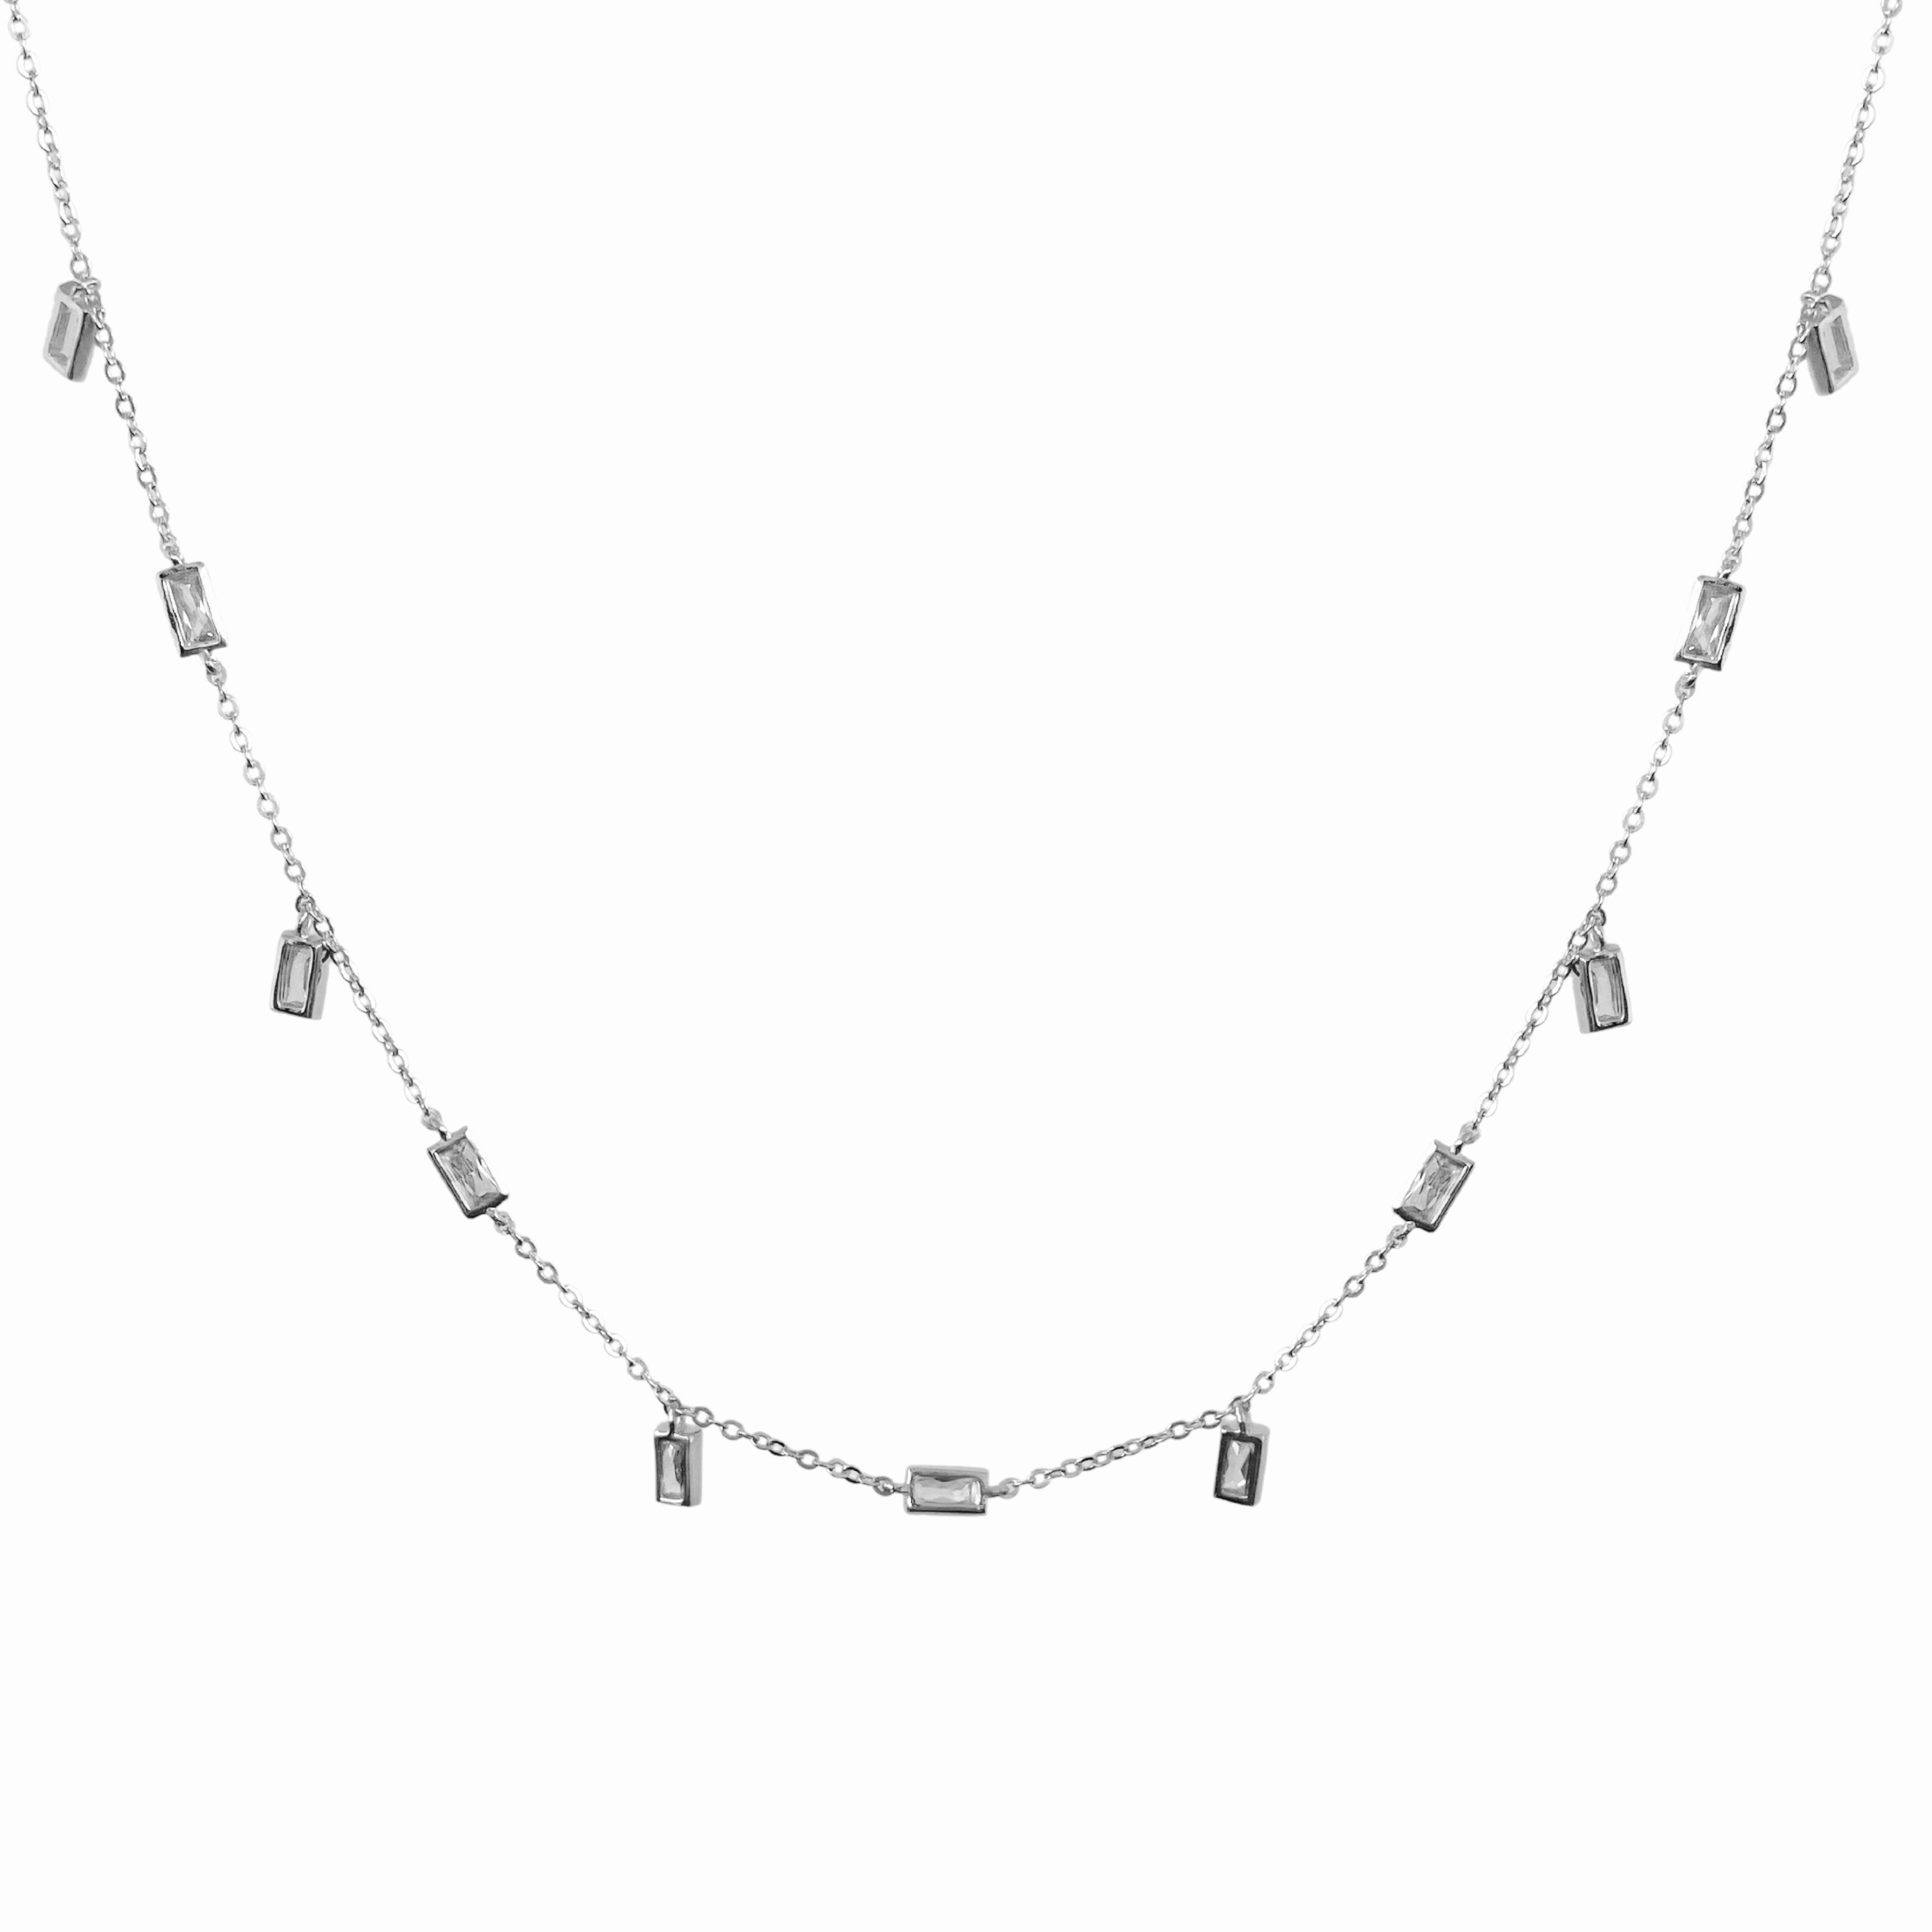 Rectangular Flakes Necklace